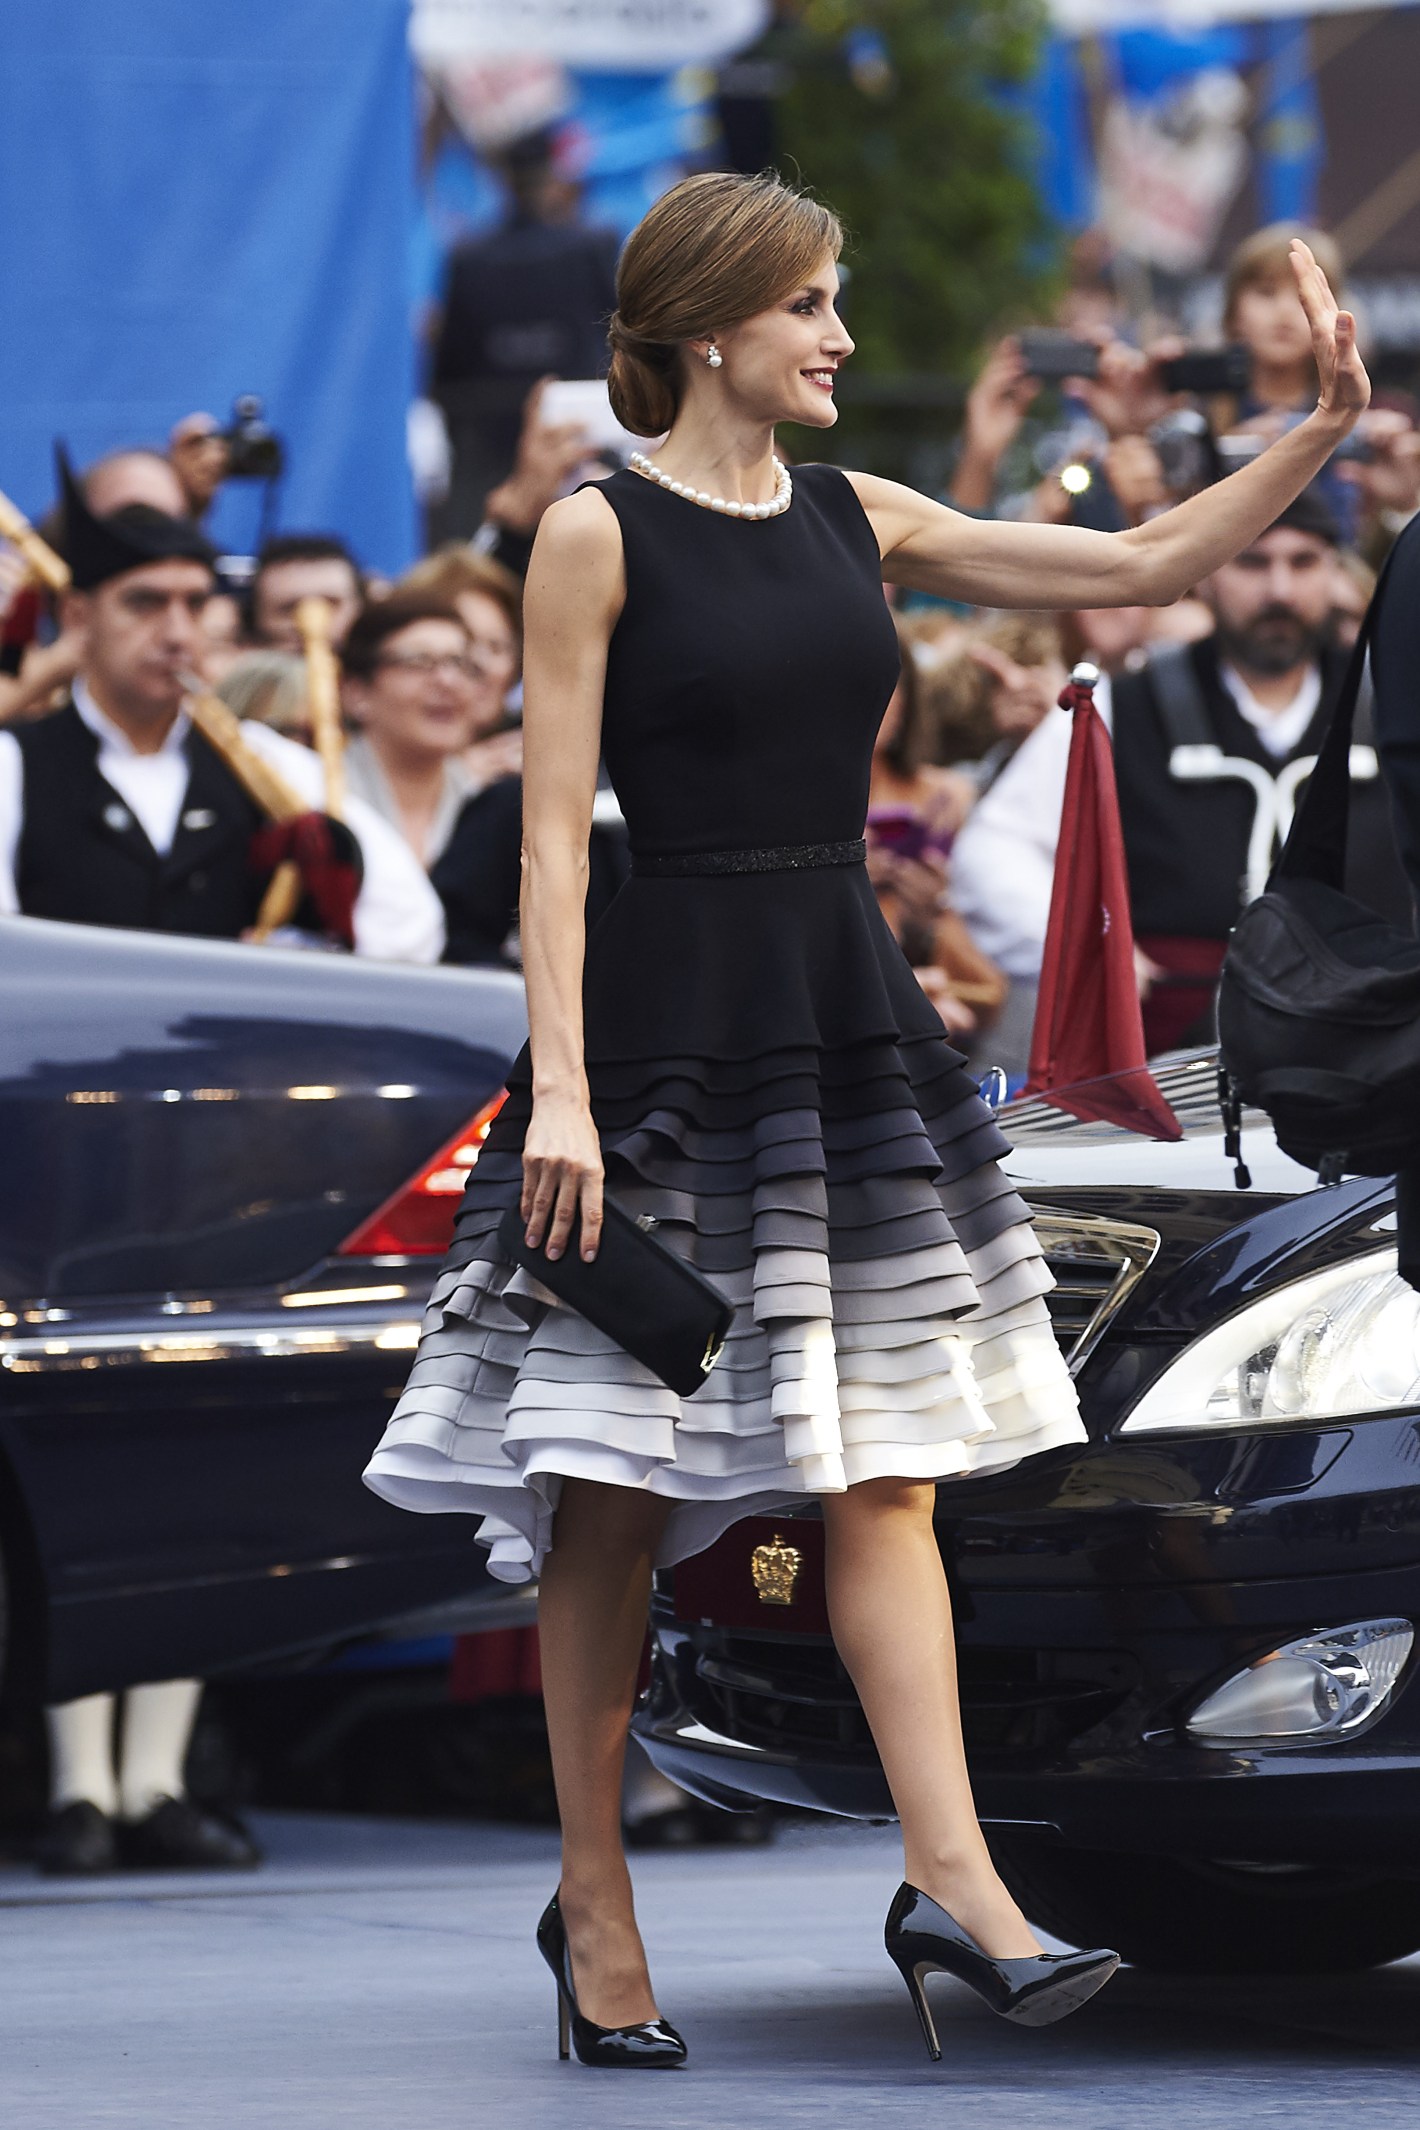 Mandatory Credit: Photo by REX/Shutterstock (5293723ah) Queen Letizia Princesa de Asturias Awards, Gijon, Spain - 23 Oct 2015